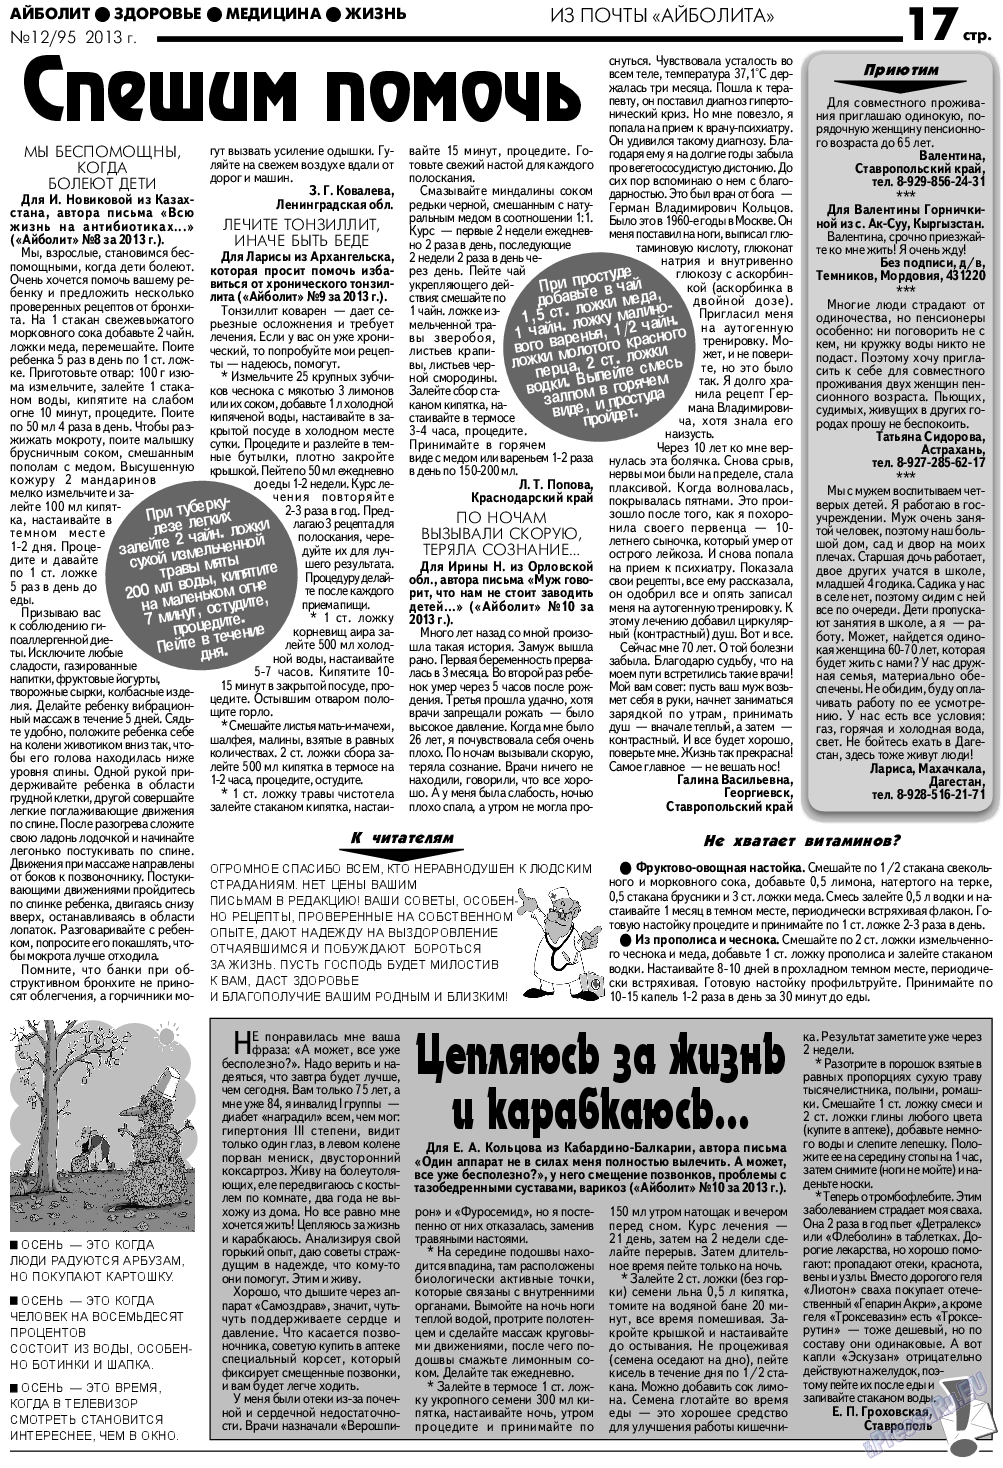 АйБолит (газета). 2013 год, номер 12, стр. 17